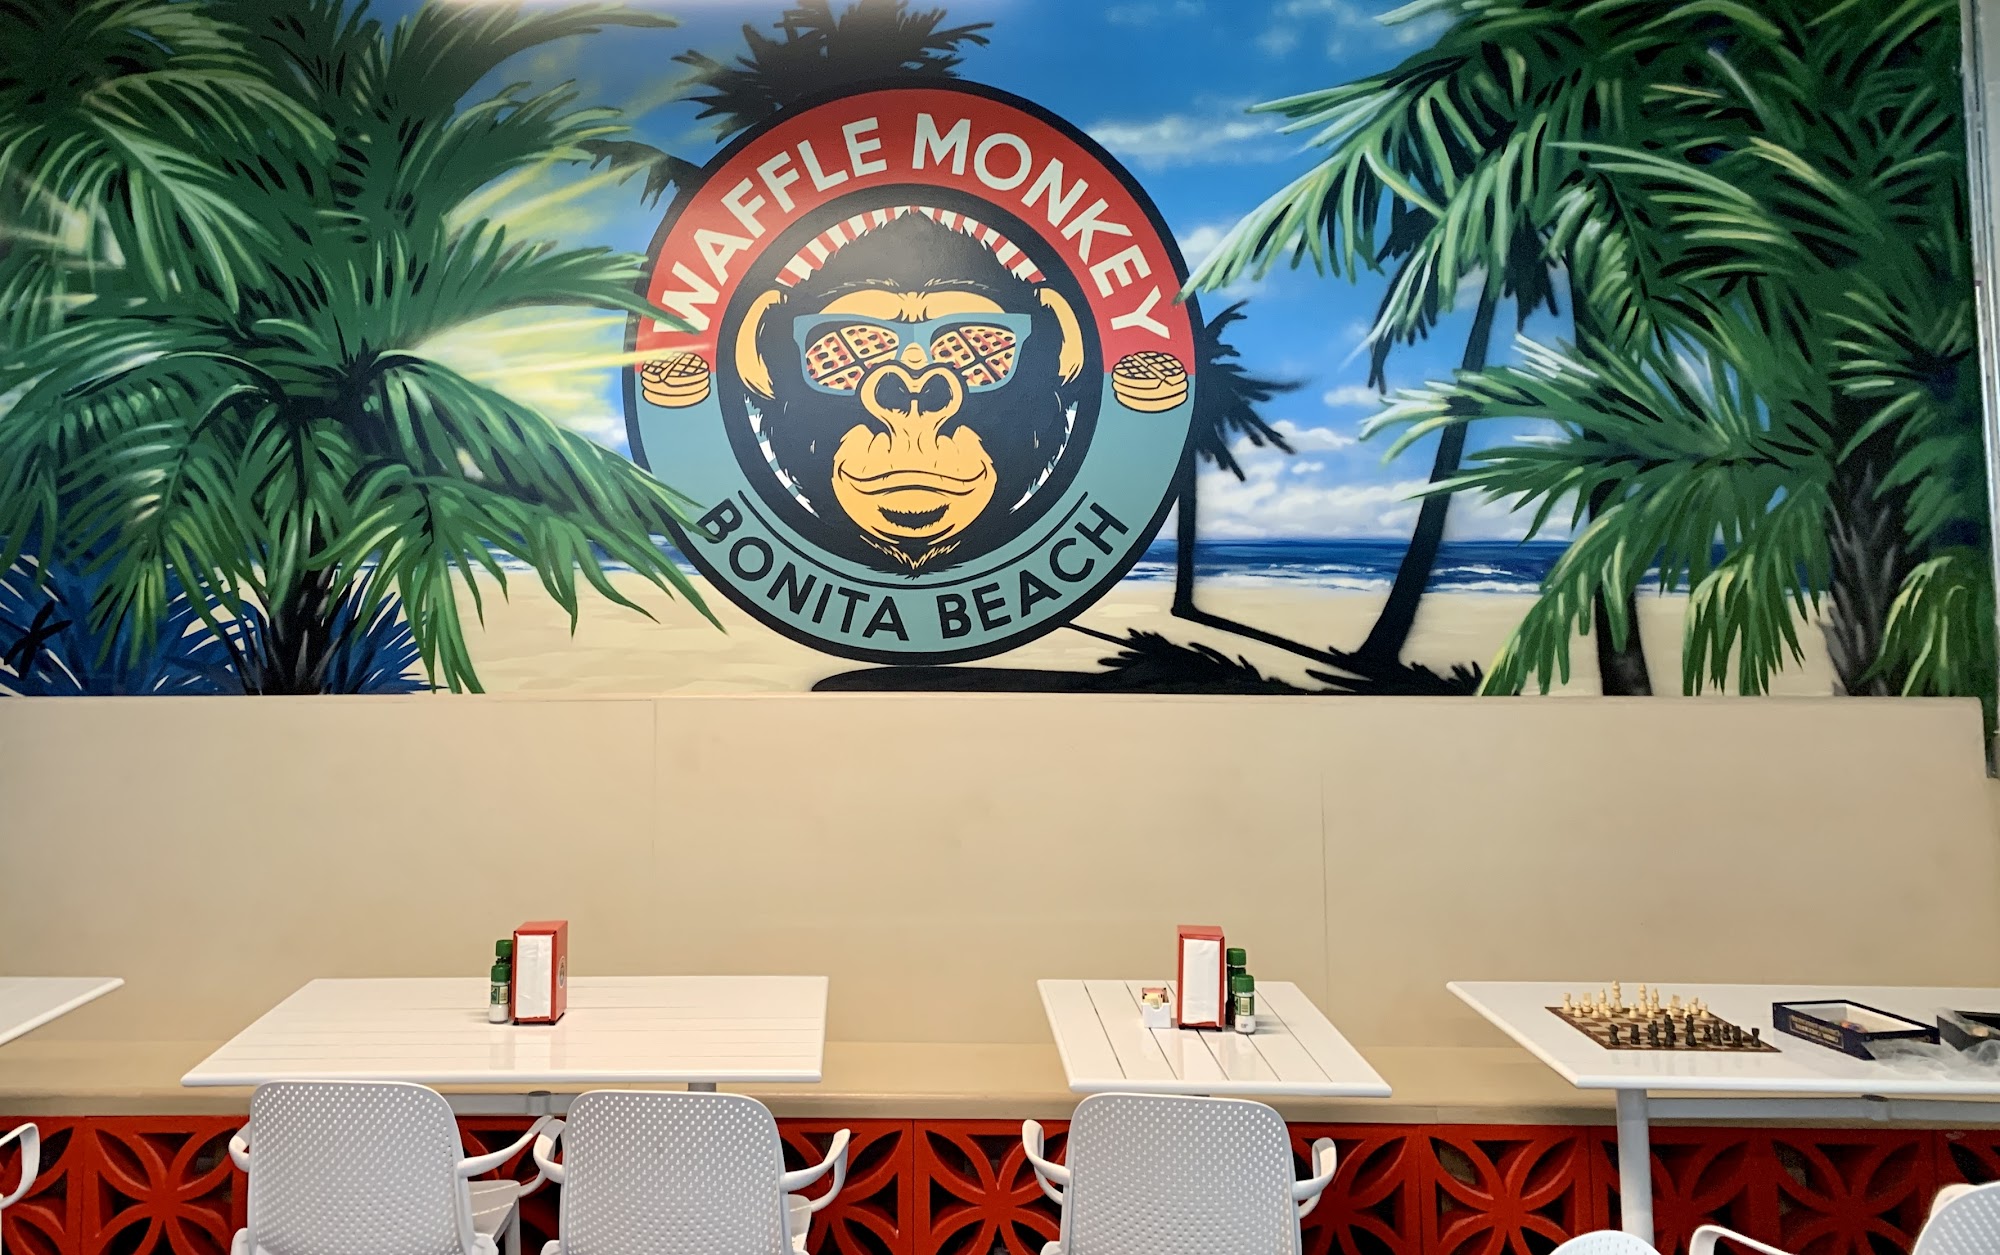 Waffle Monkey Bonita Beach